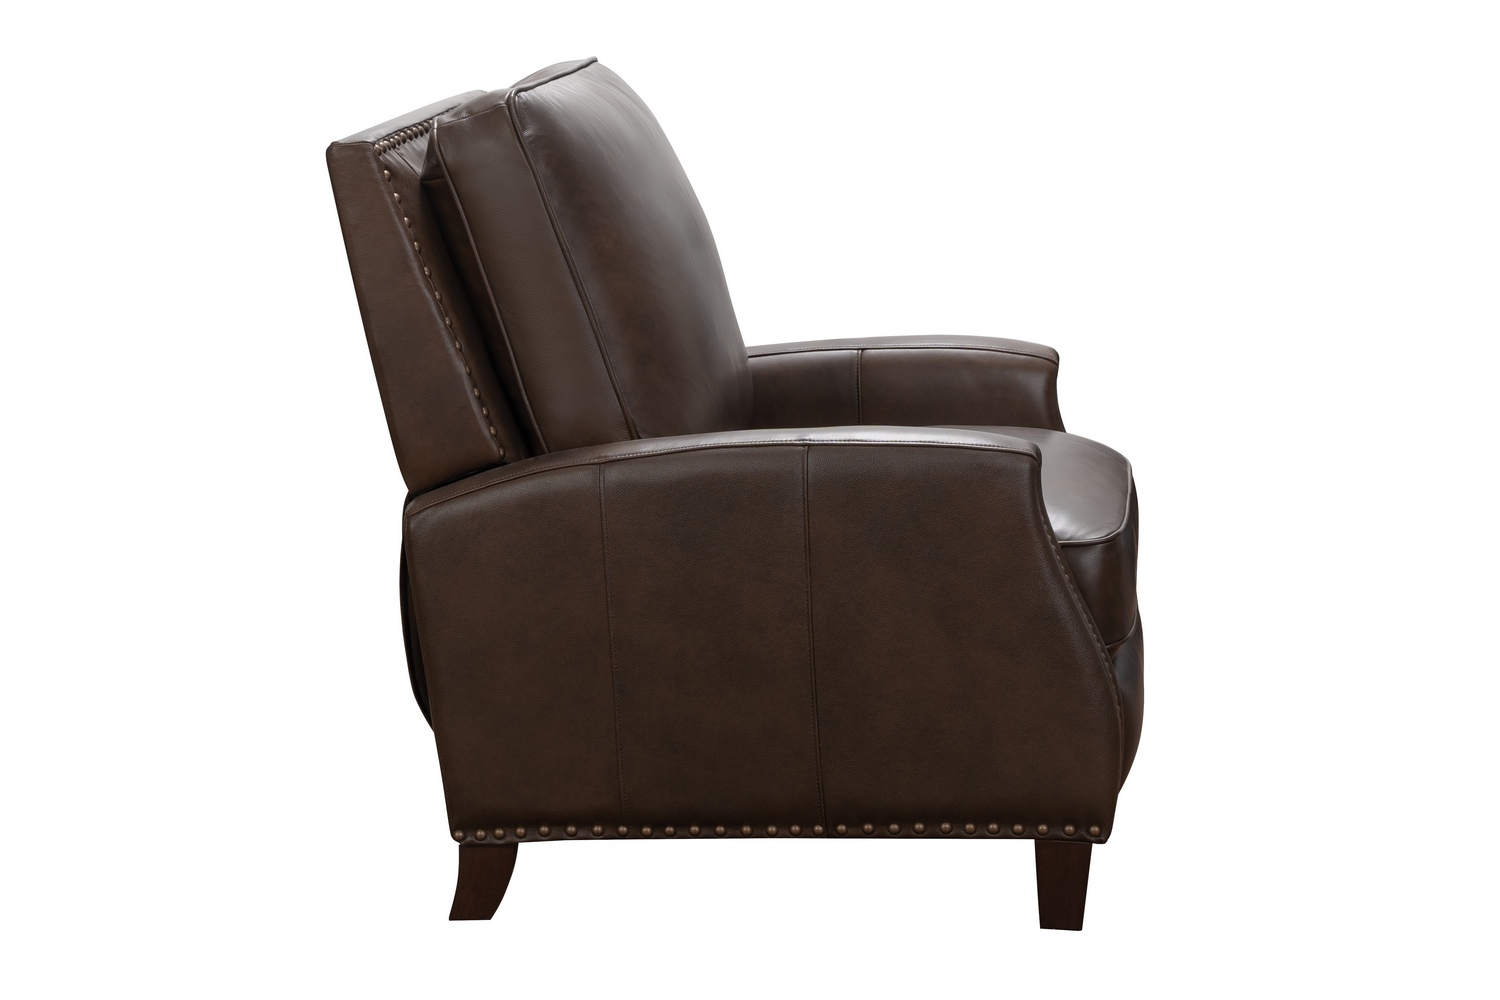 Barcalounger Melrose Recliner Chair - Ashford Walnut/All Leather